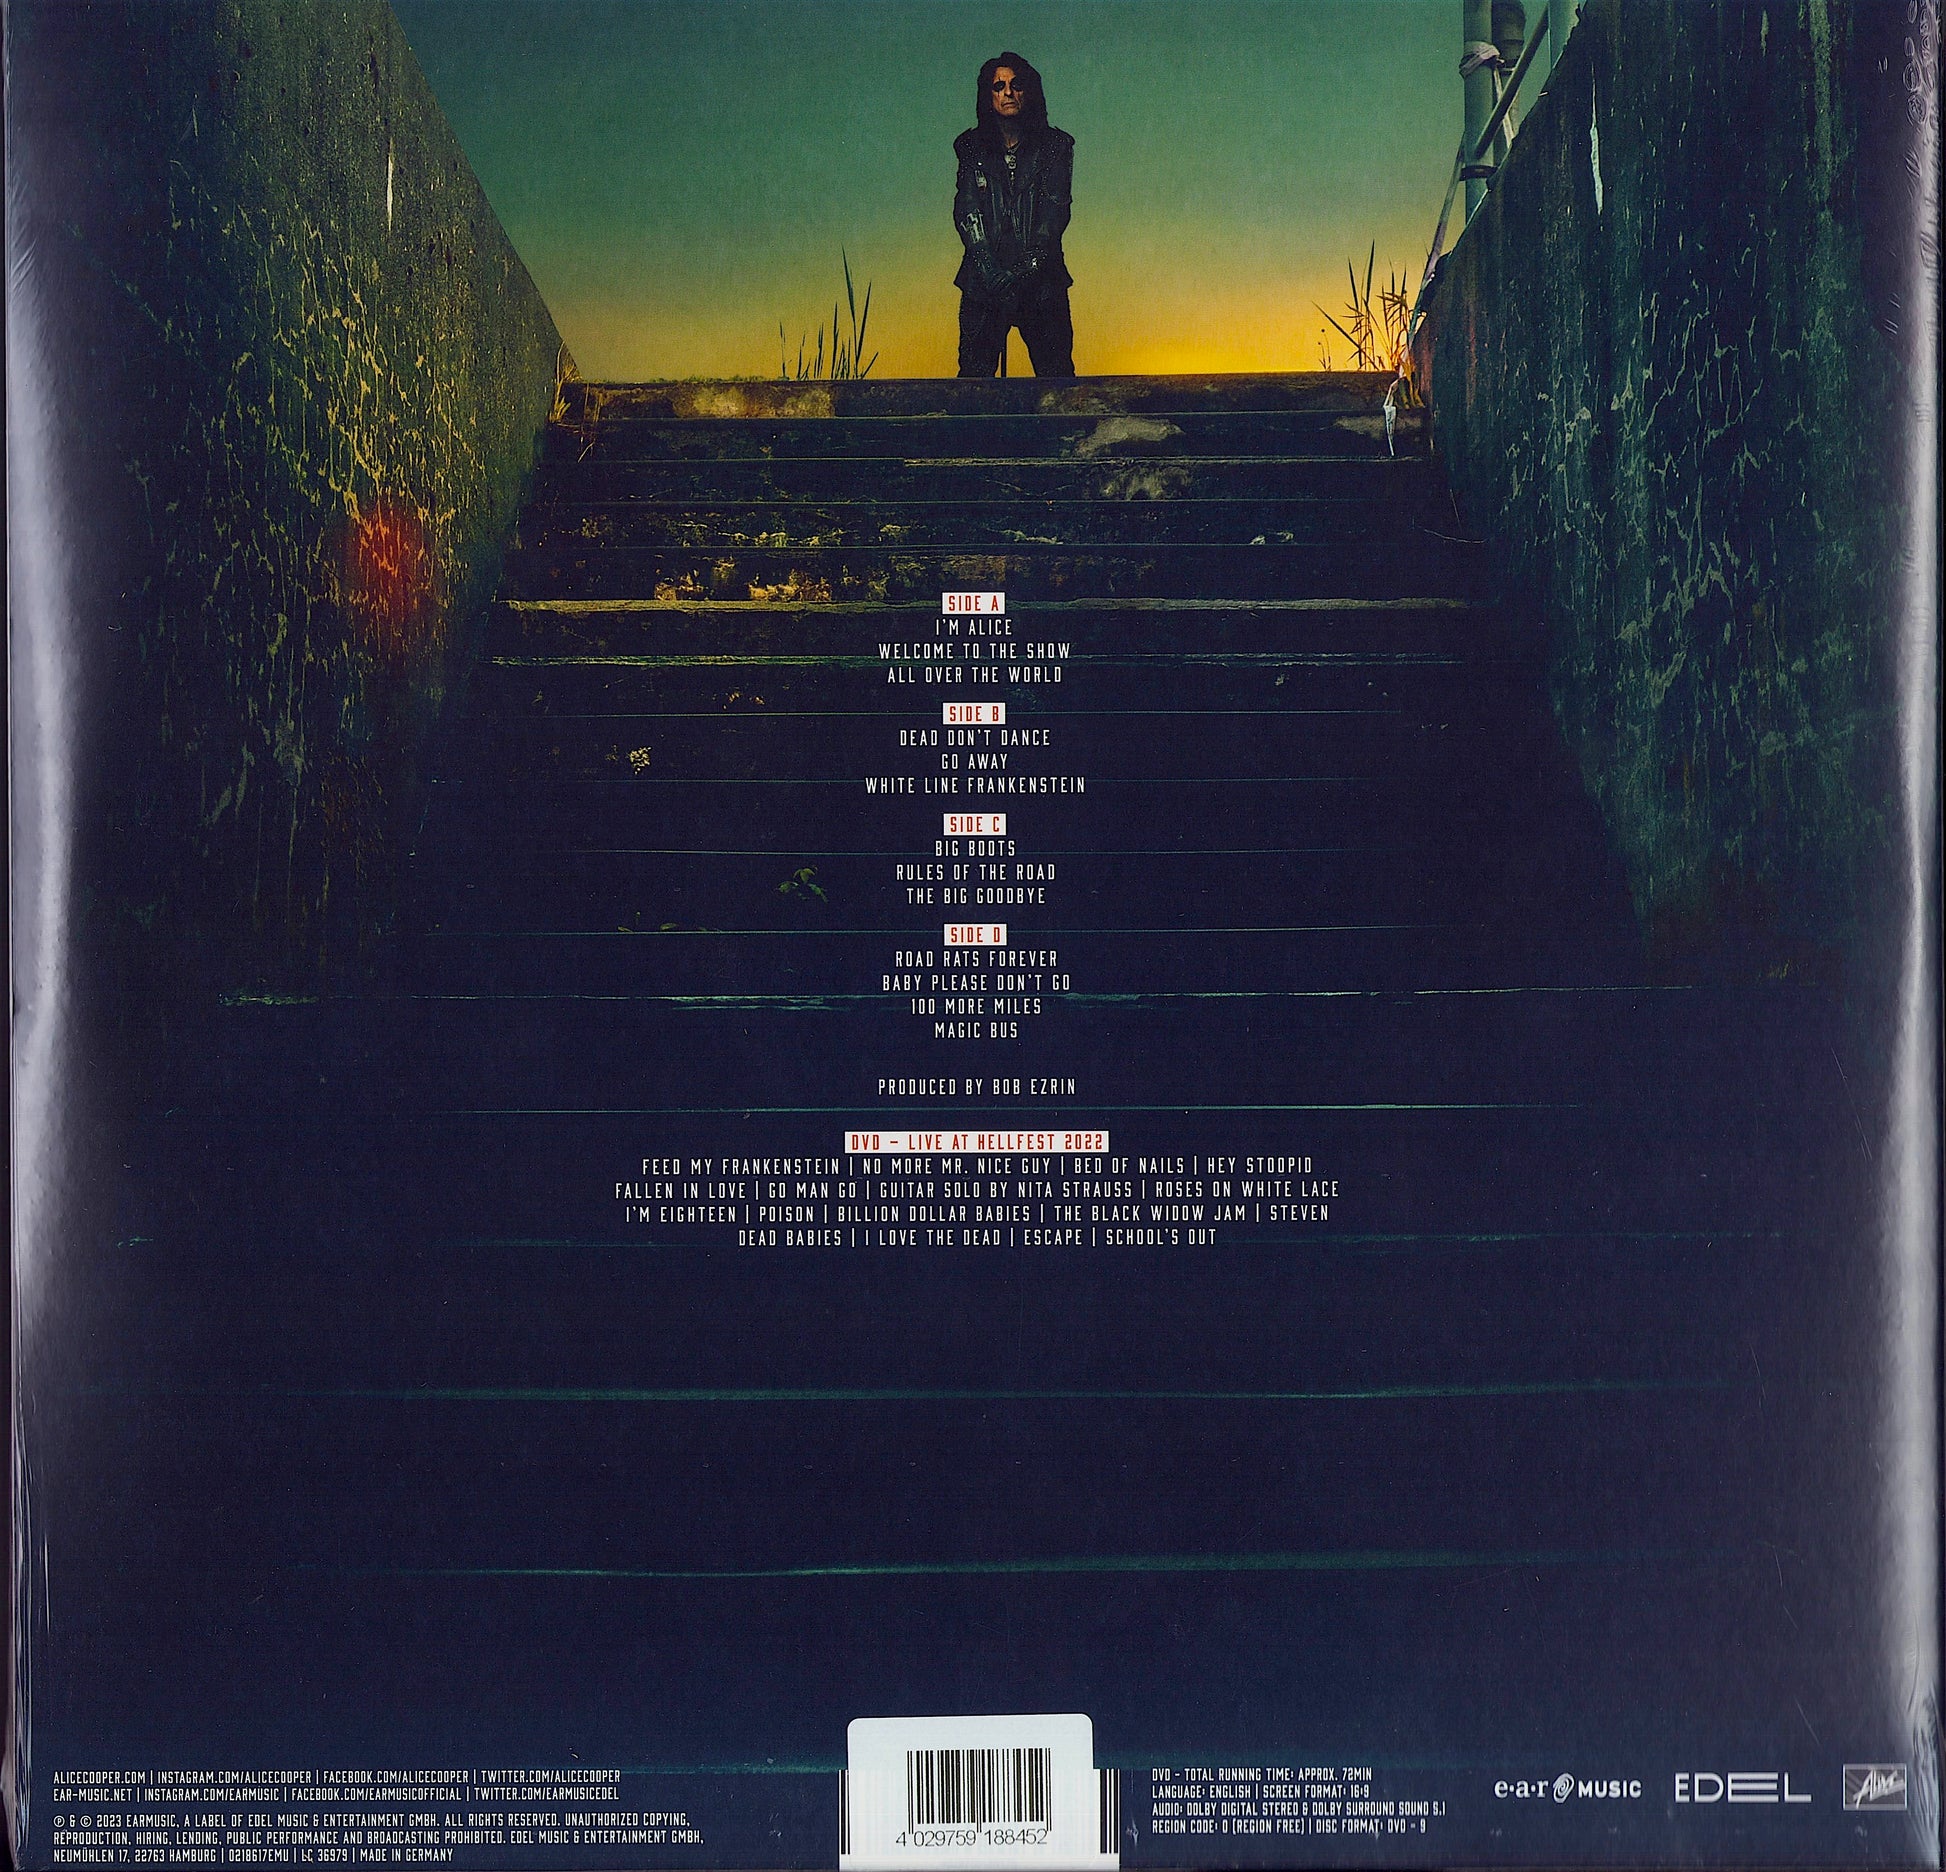 Alice Cooper - Road Black/Blue Split & Yellow Splatter Vinyl 2x12" + DVD - Limited Edition